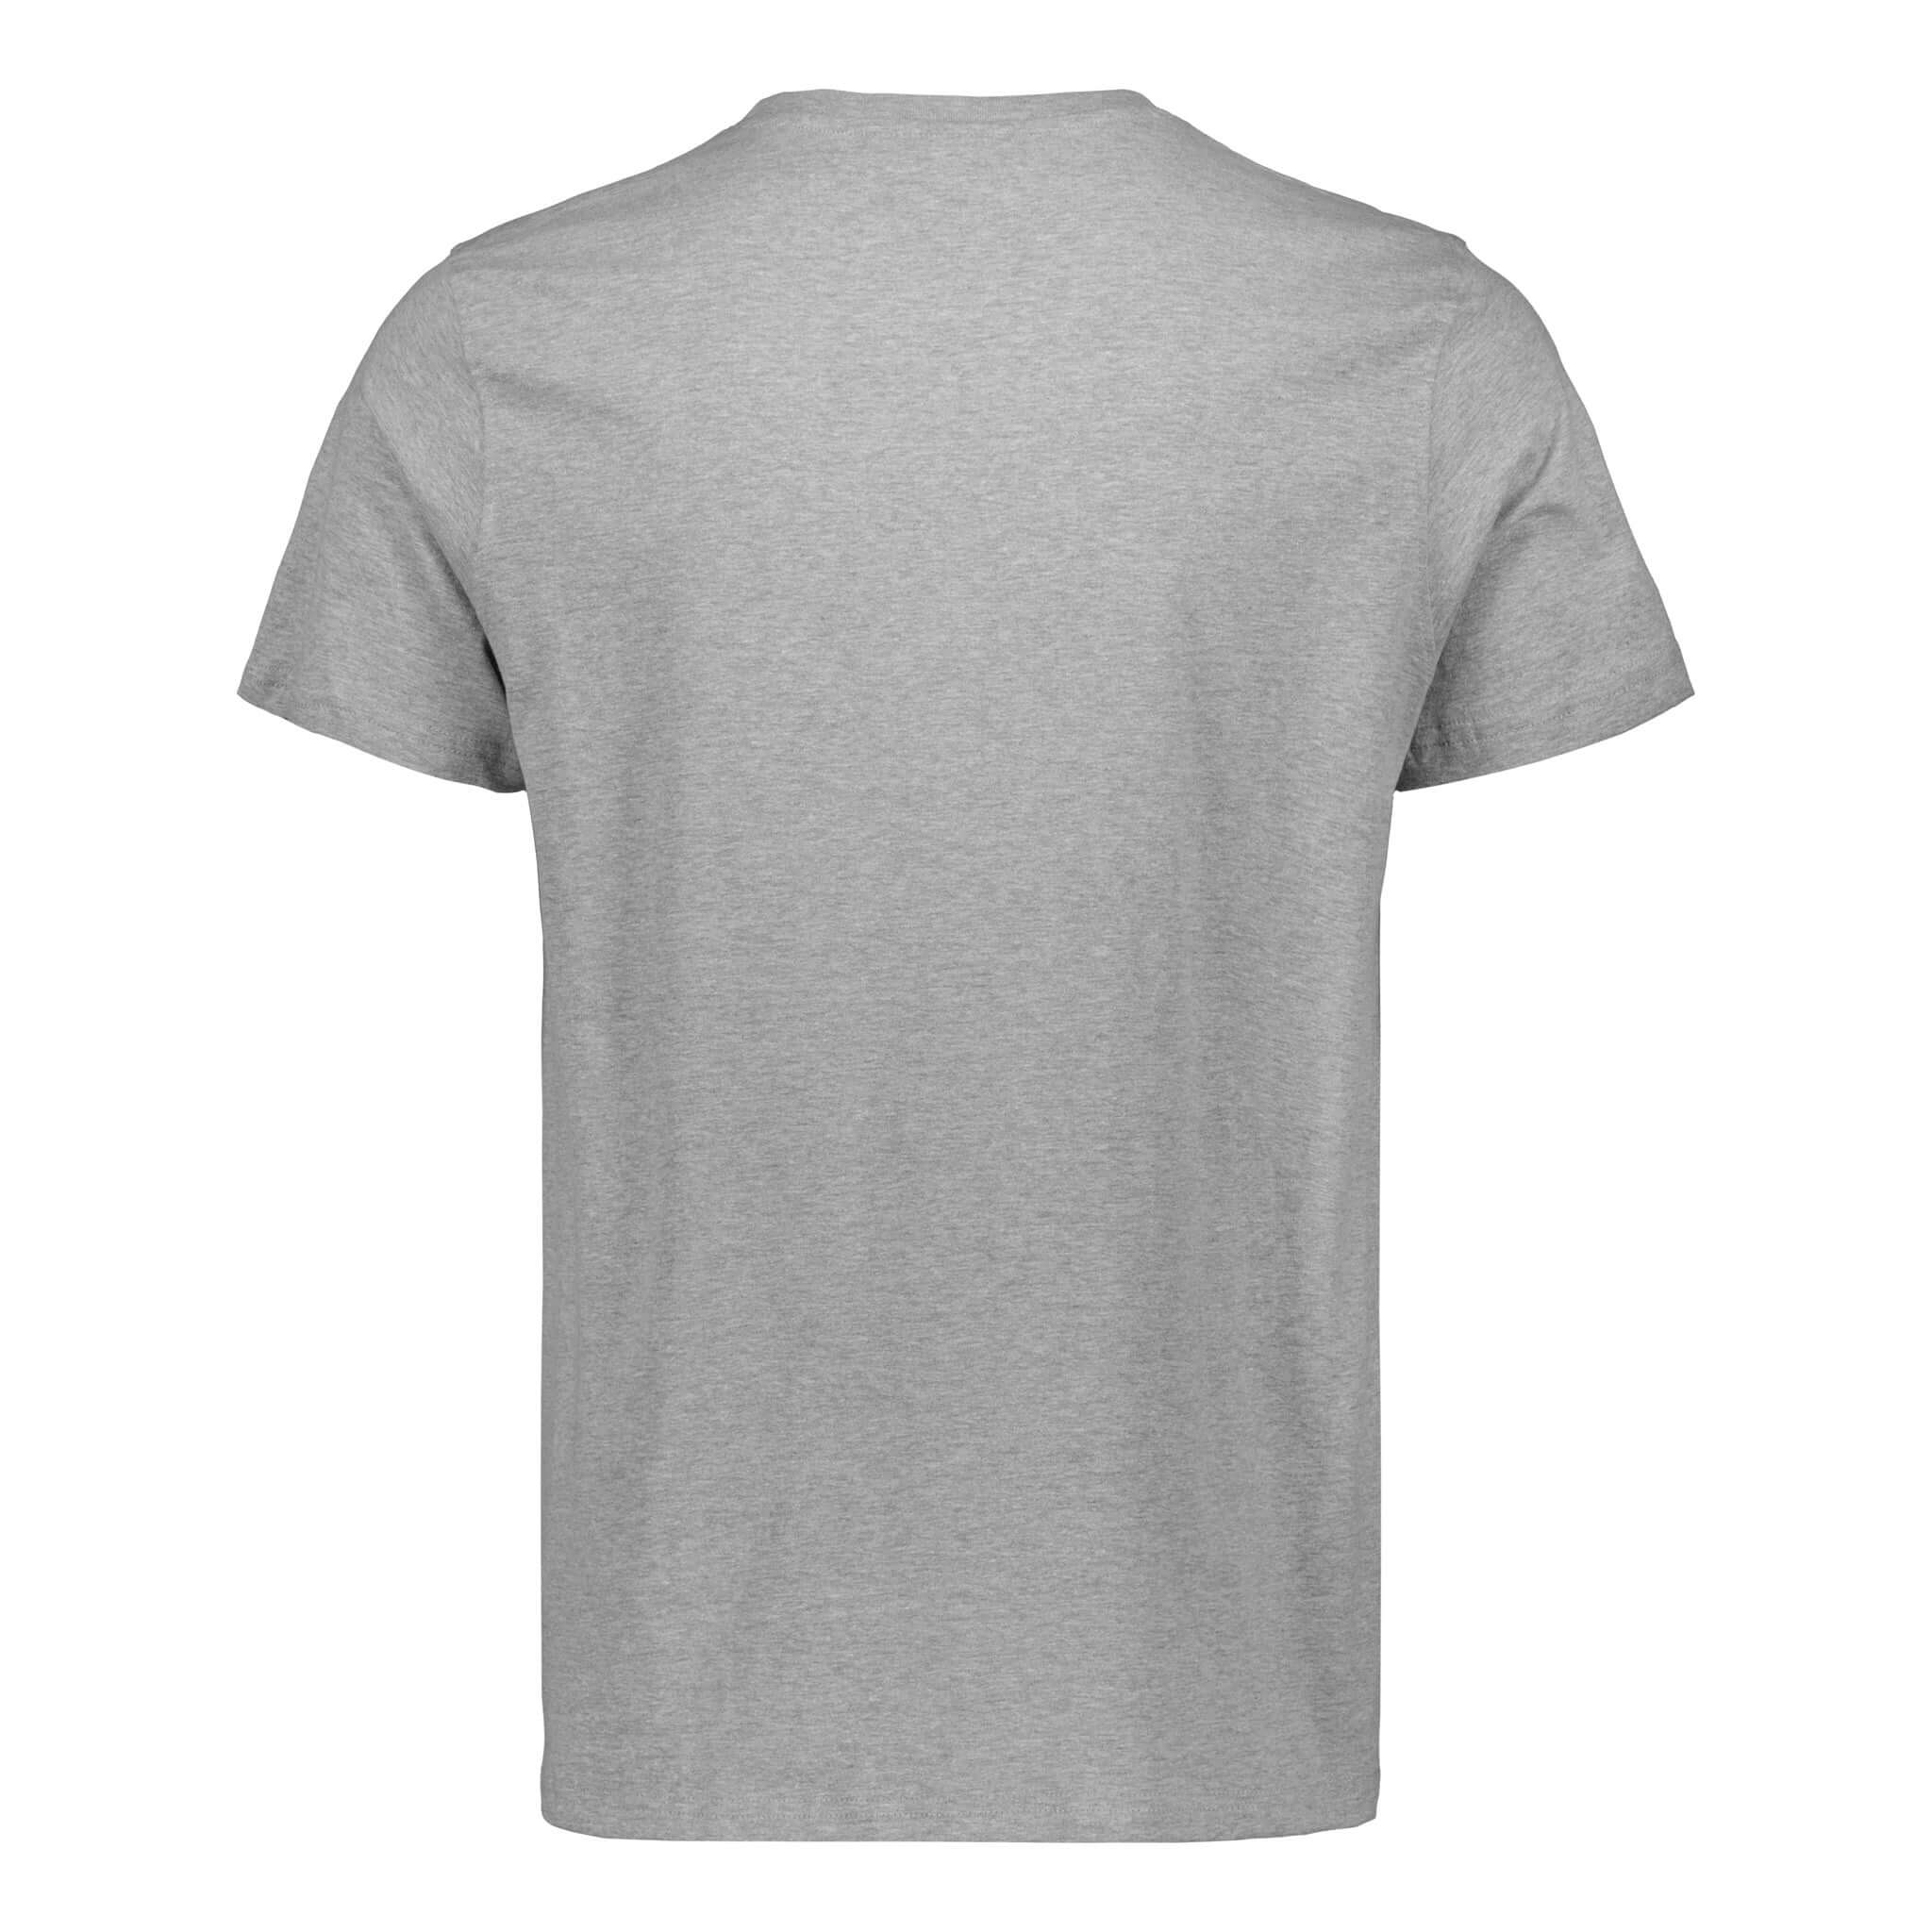 ENCELADUS T-Shirt Grey | ENCE Shop